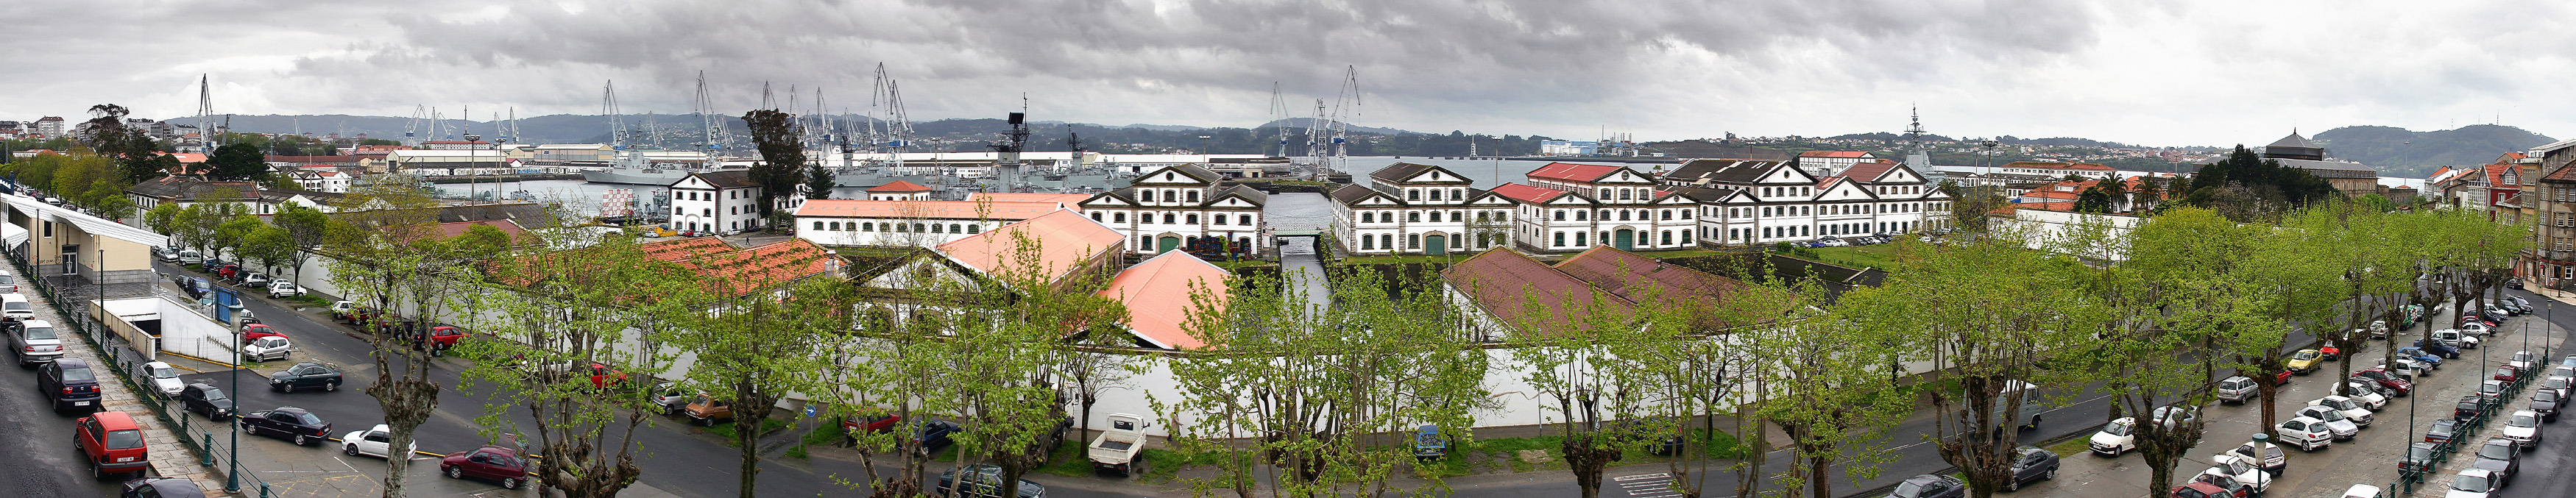 Ferrol Port (Galiza, Spain)